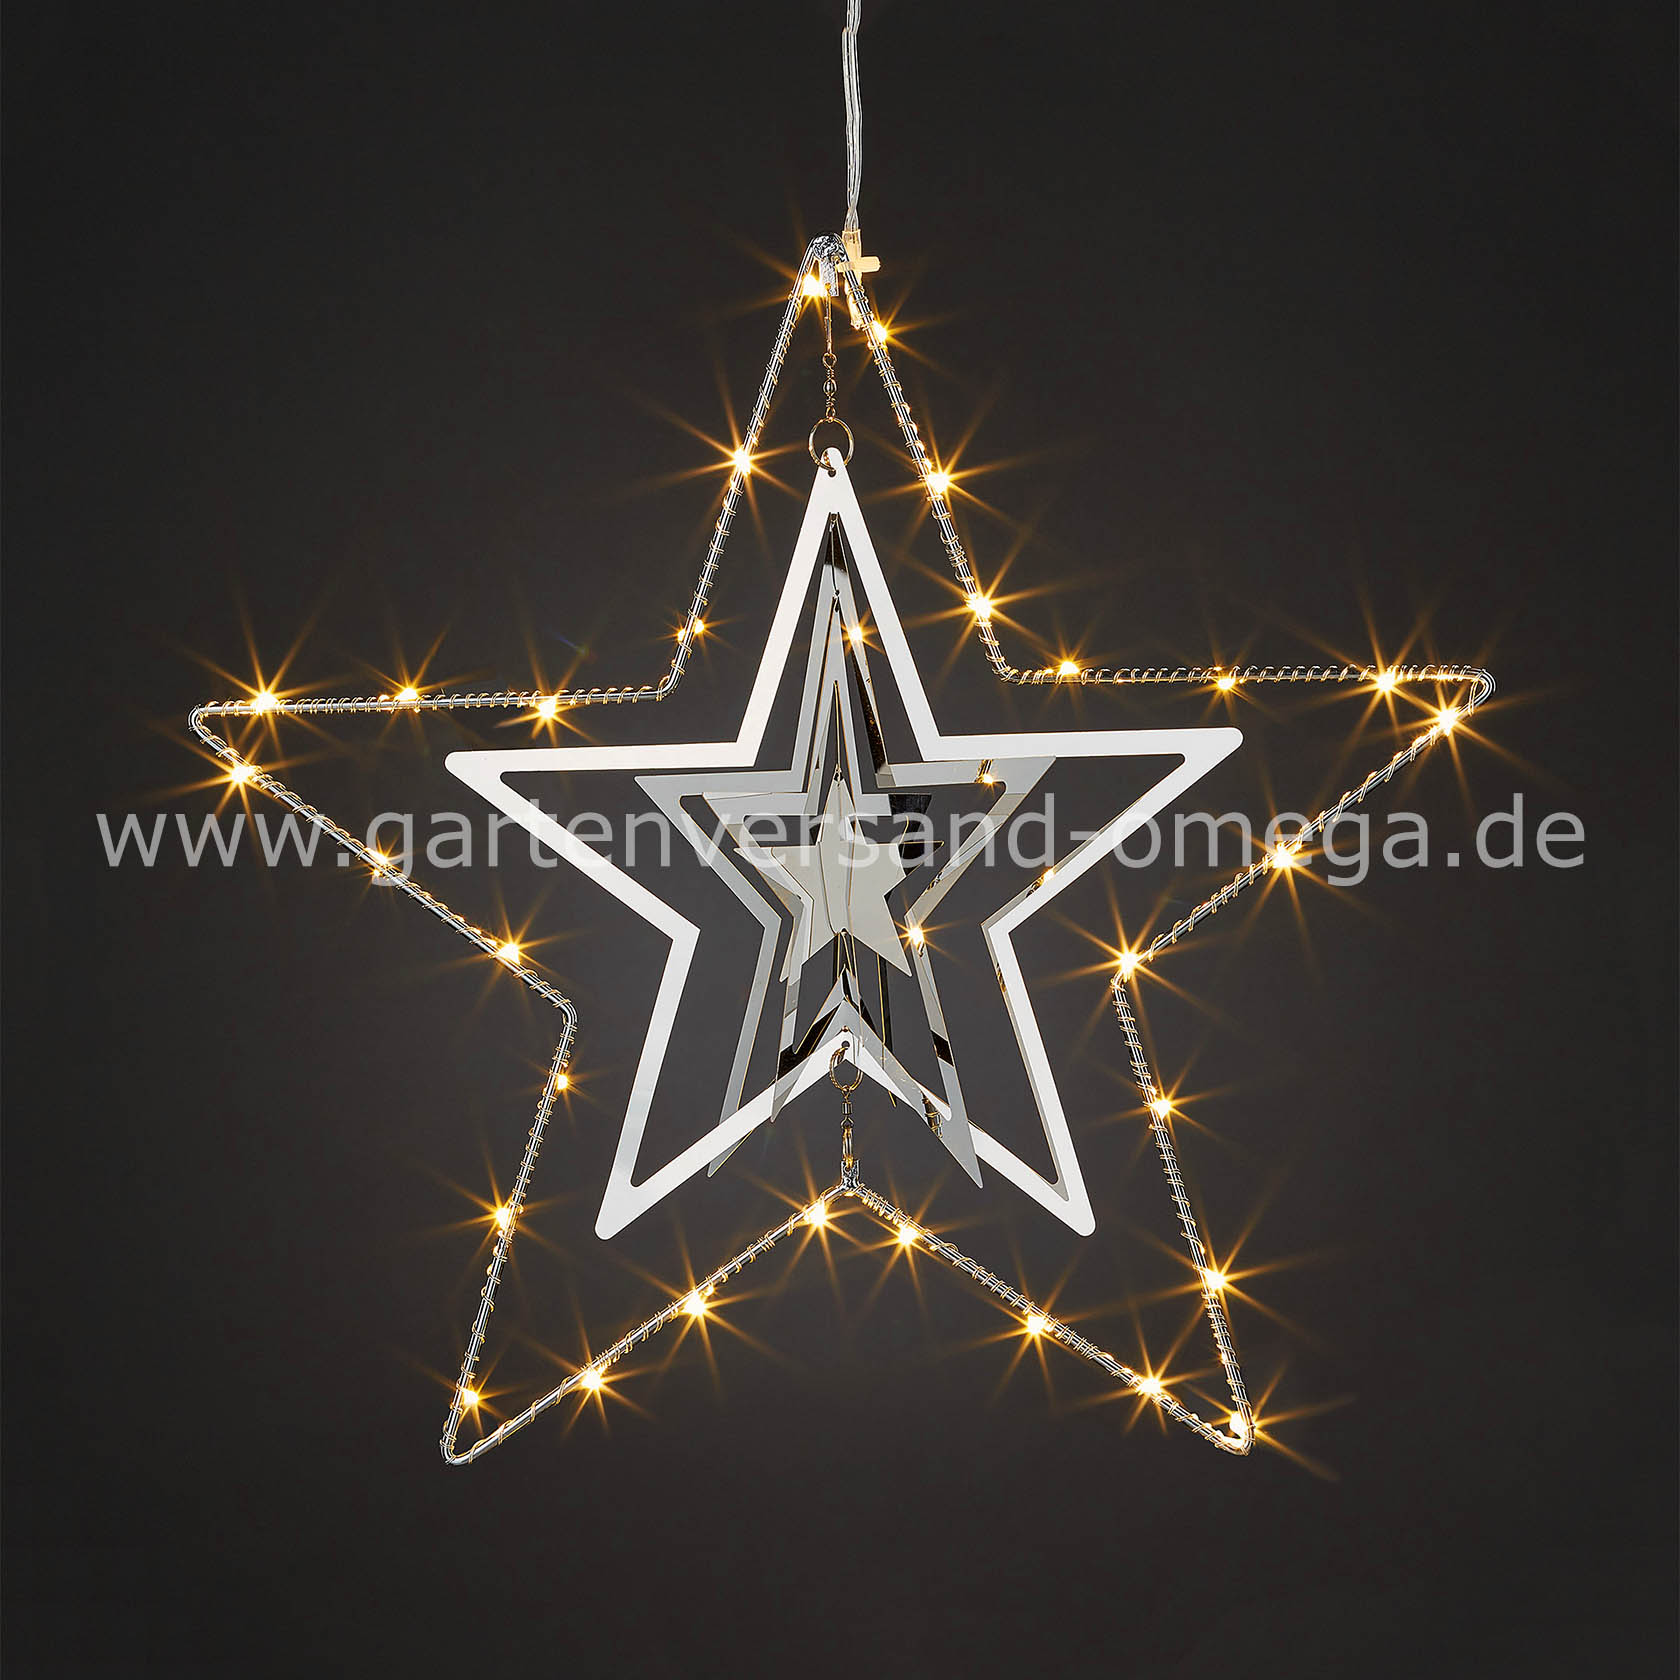 LED 3D LED-Stern, Innen, - für Weihnachtsbeleuchtung beleuchtet, LED-Mobilee, Metall-Stern Stern Weihnachtsdeko Stern-Mobilee, Weihnachtsstern, Deko-Weihnachtsstern Metall, Weihnachtsbeleuchtung zum aus Hängen